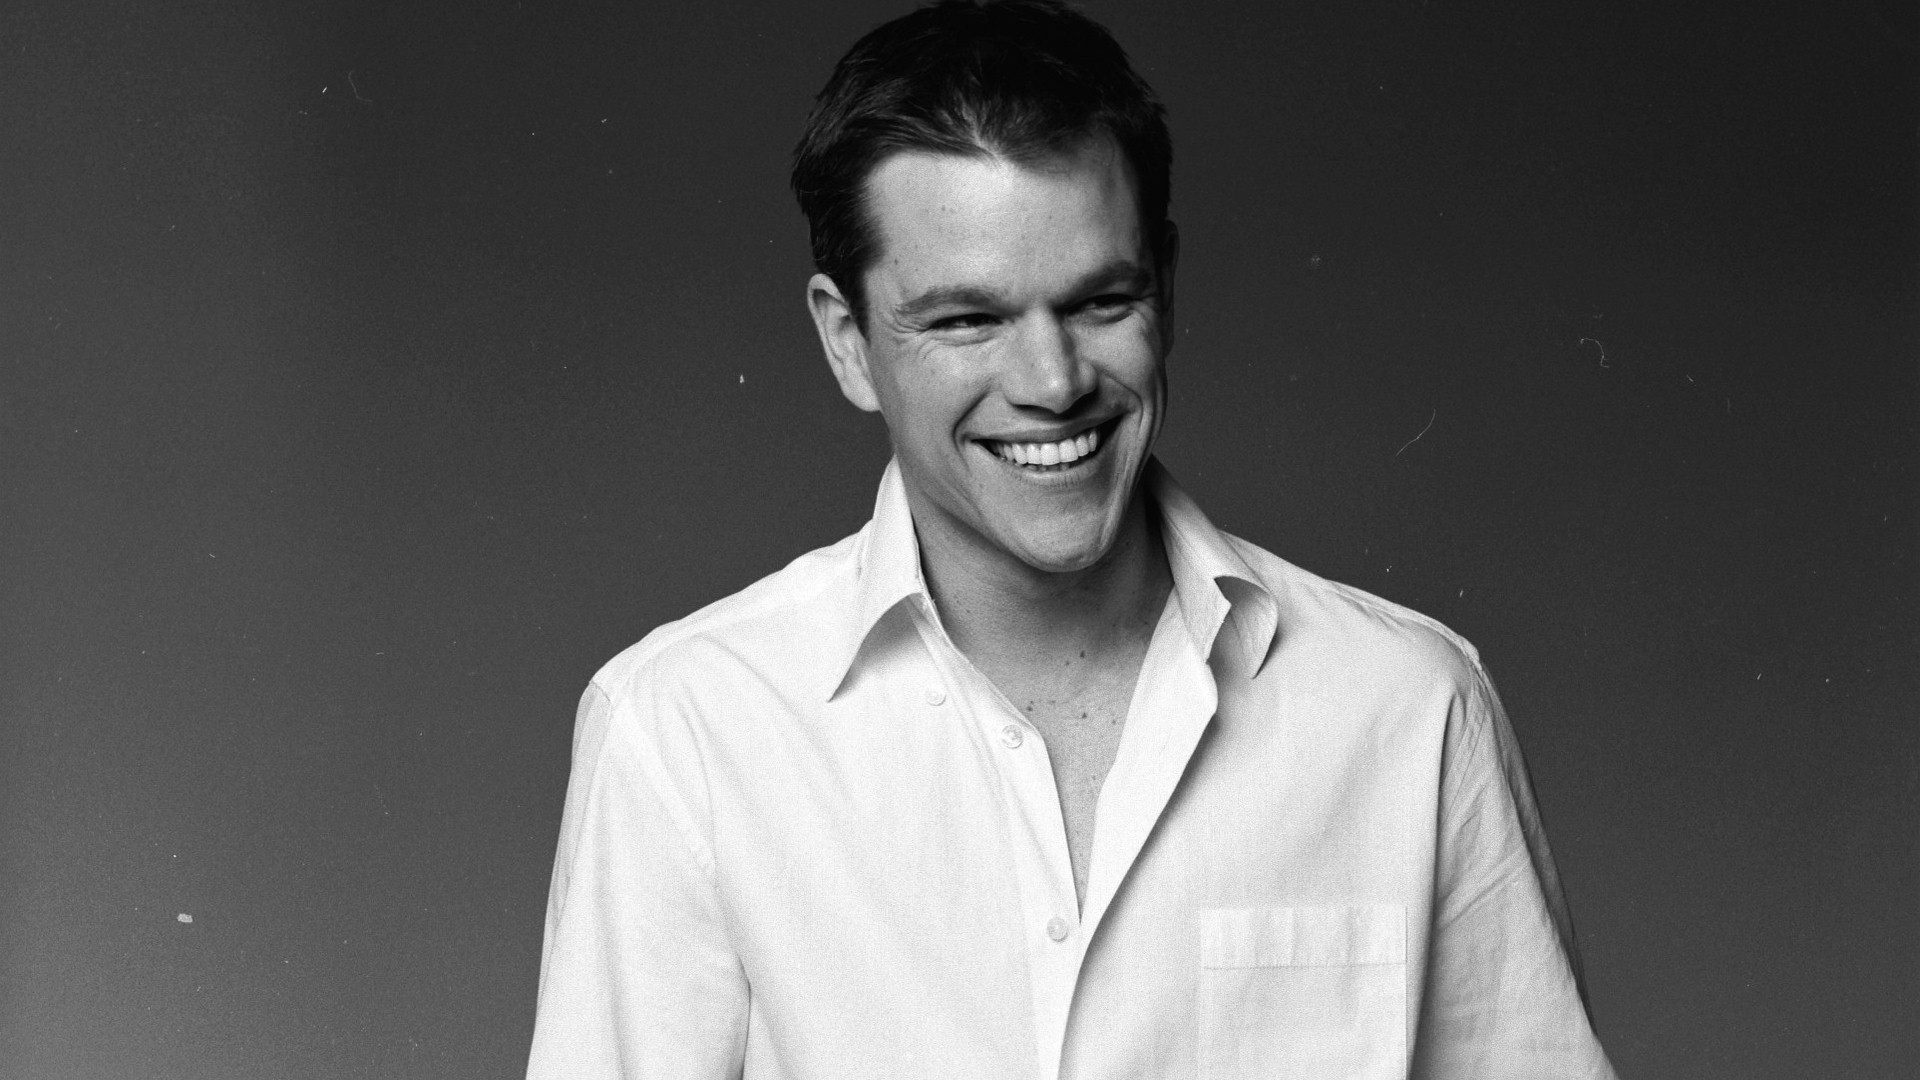 Dasing Look Of Matt Damon Popular American Film Actor With Smile